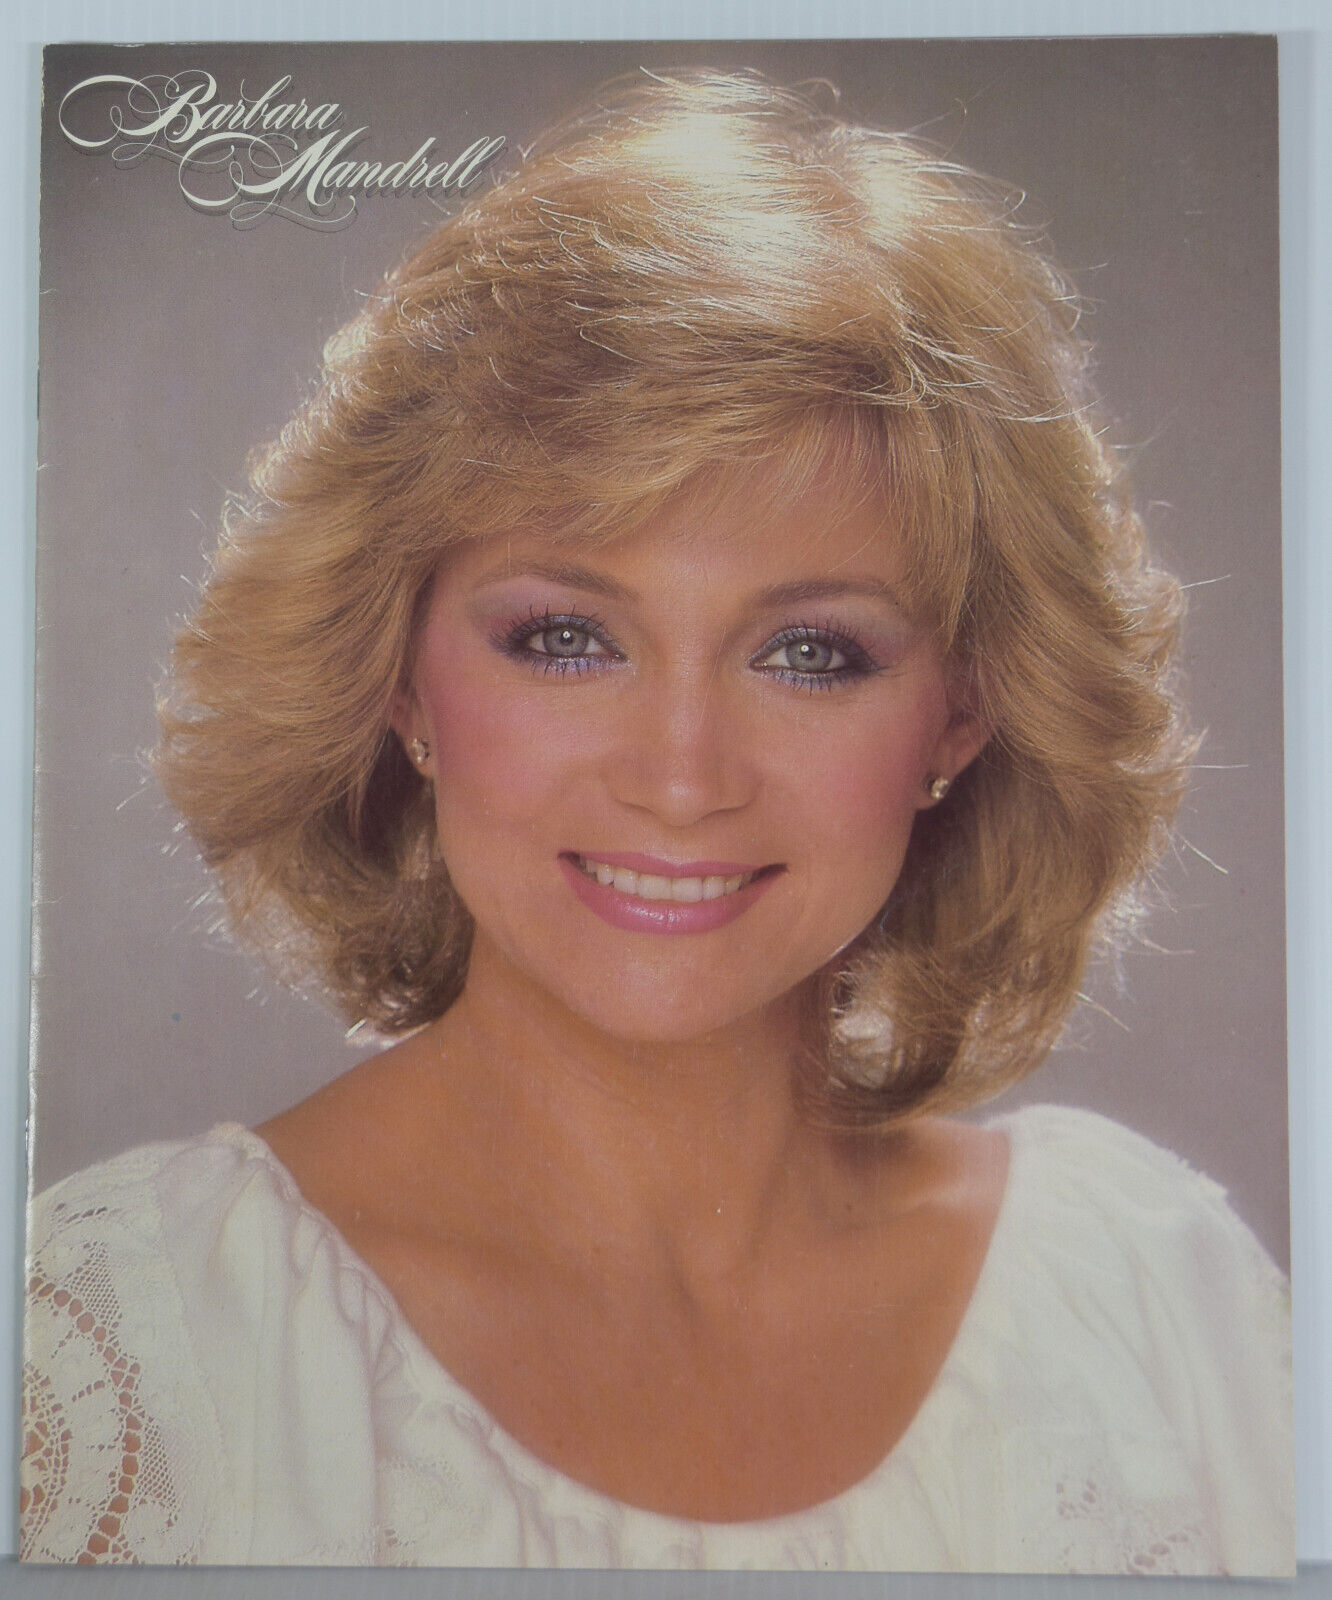 1982 Barbara Mandrell Booklet Advertising Country Music Star TV Performer